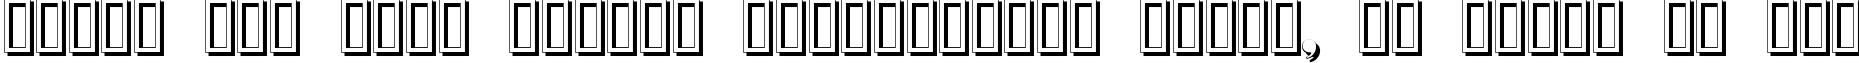 Пример написания шрифтом Domino Shadow текста на русском